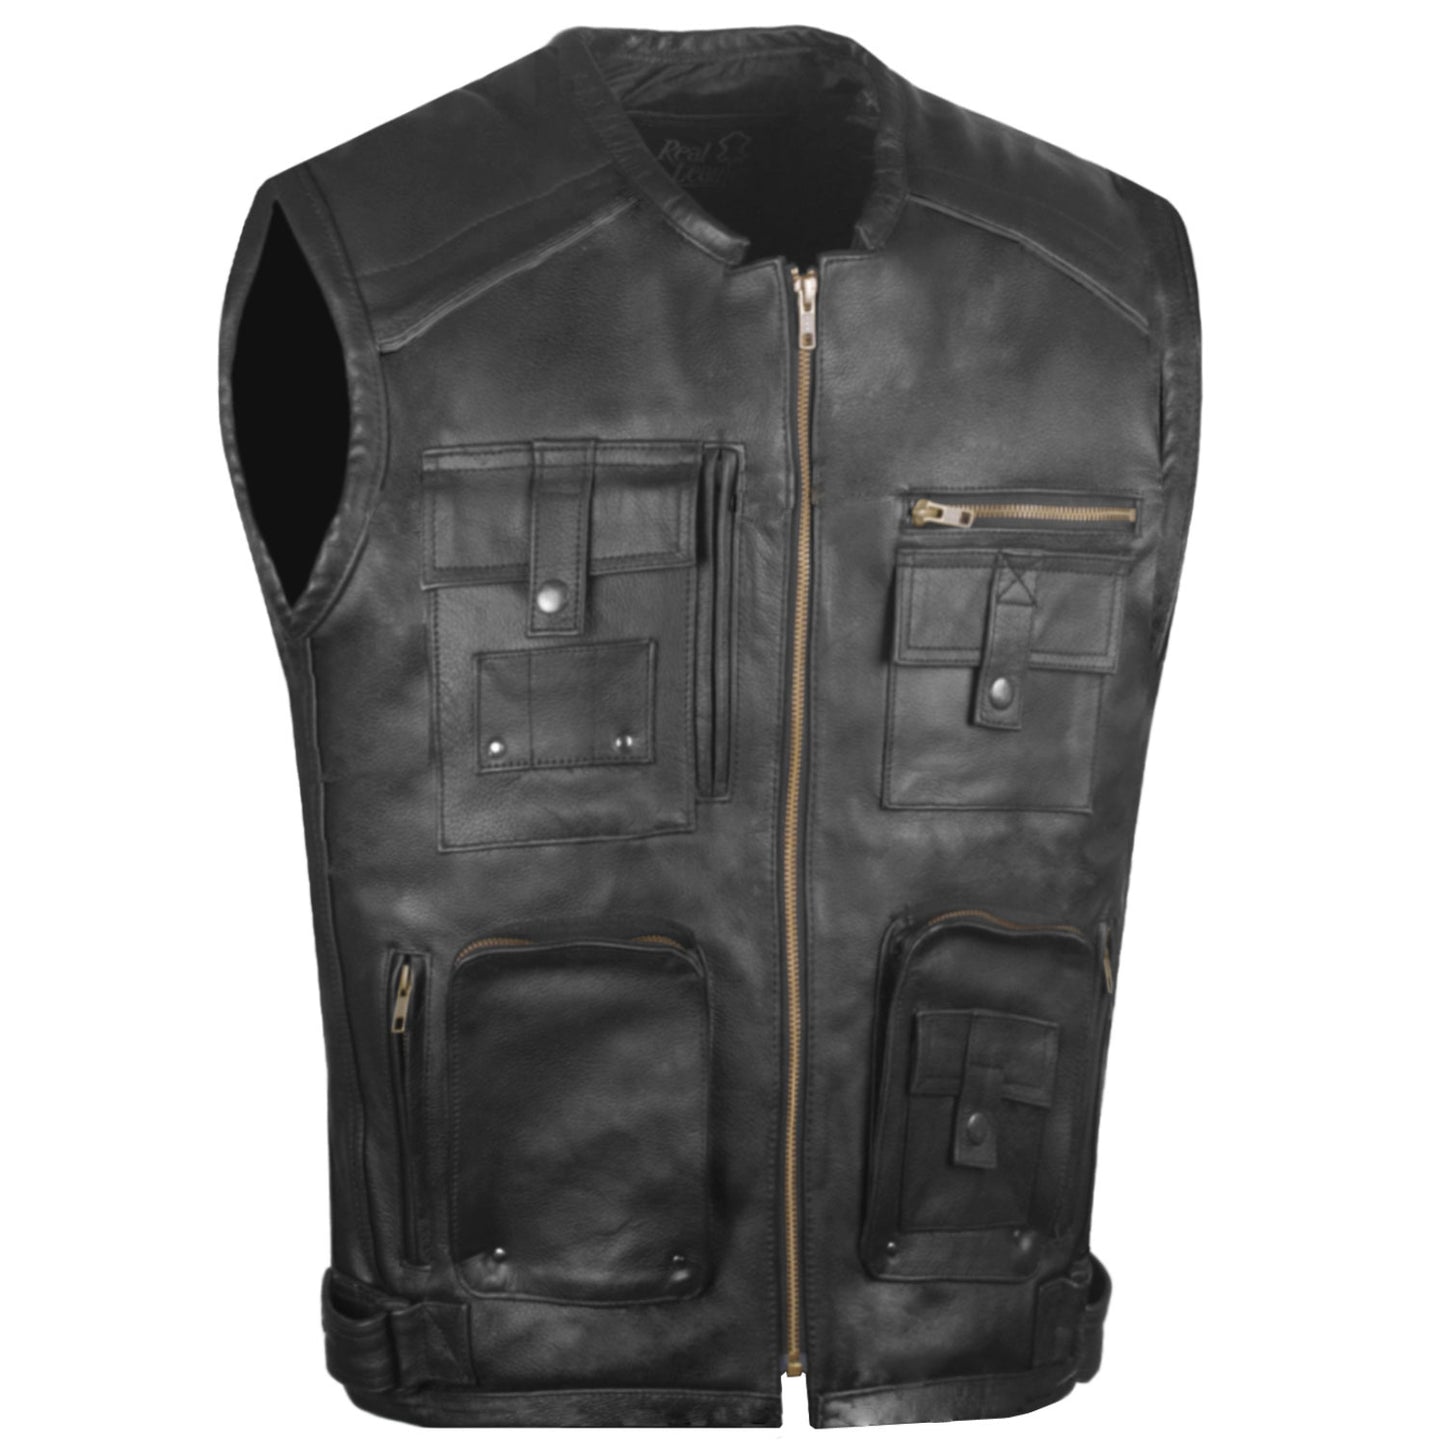 Men's Assault Motorcycle Leather Gun Pocket Biker Club Cruiser Armor Vest